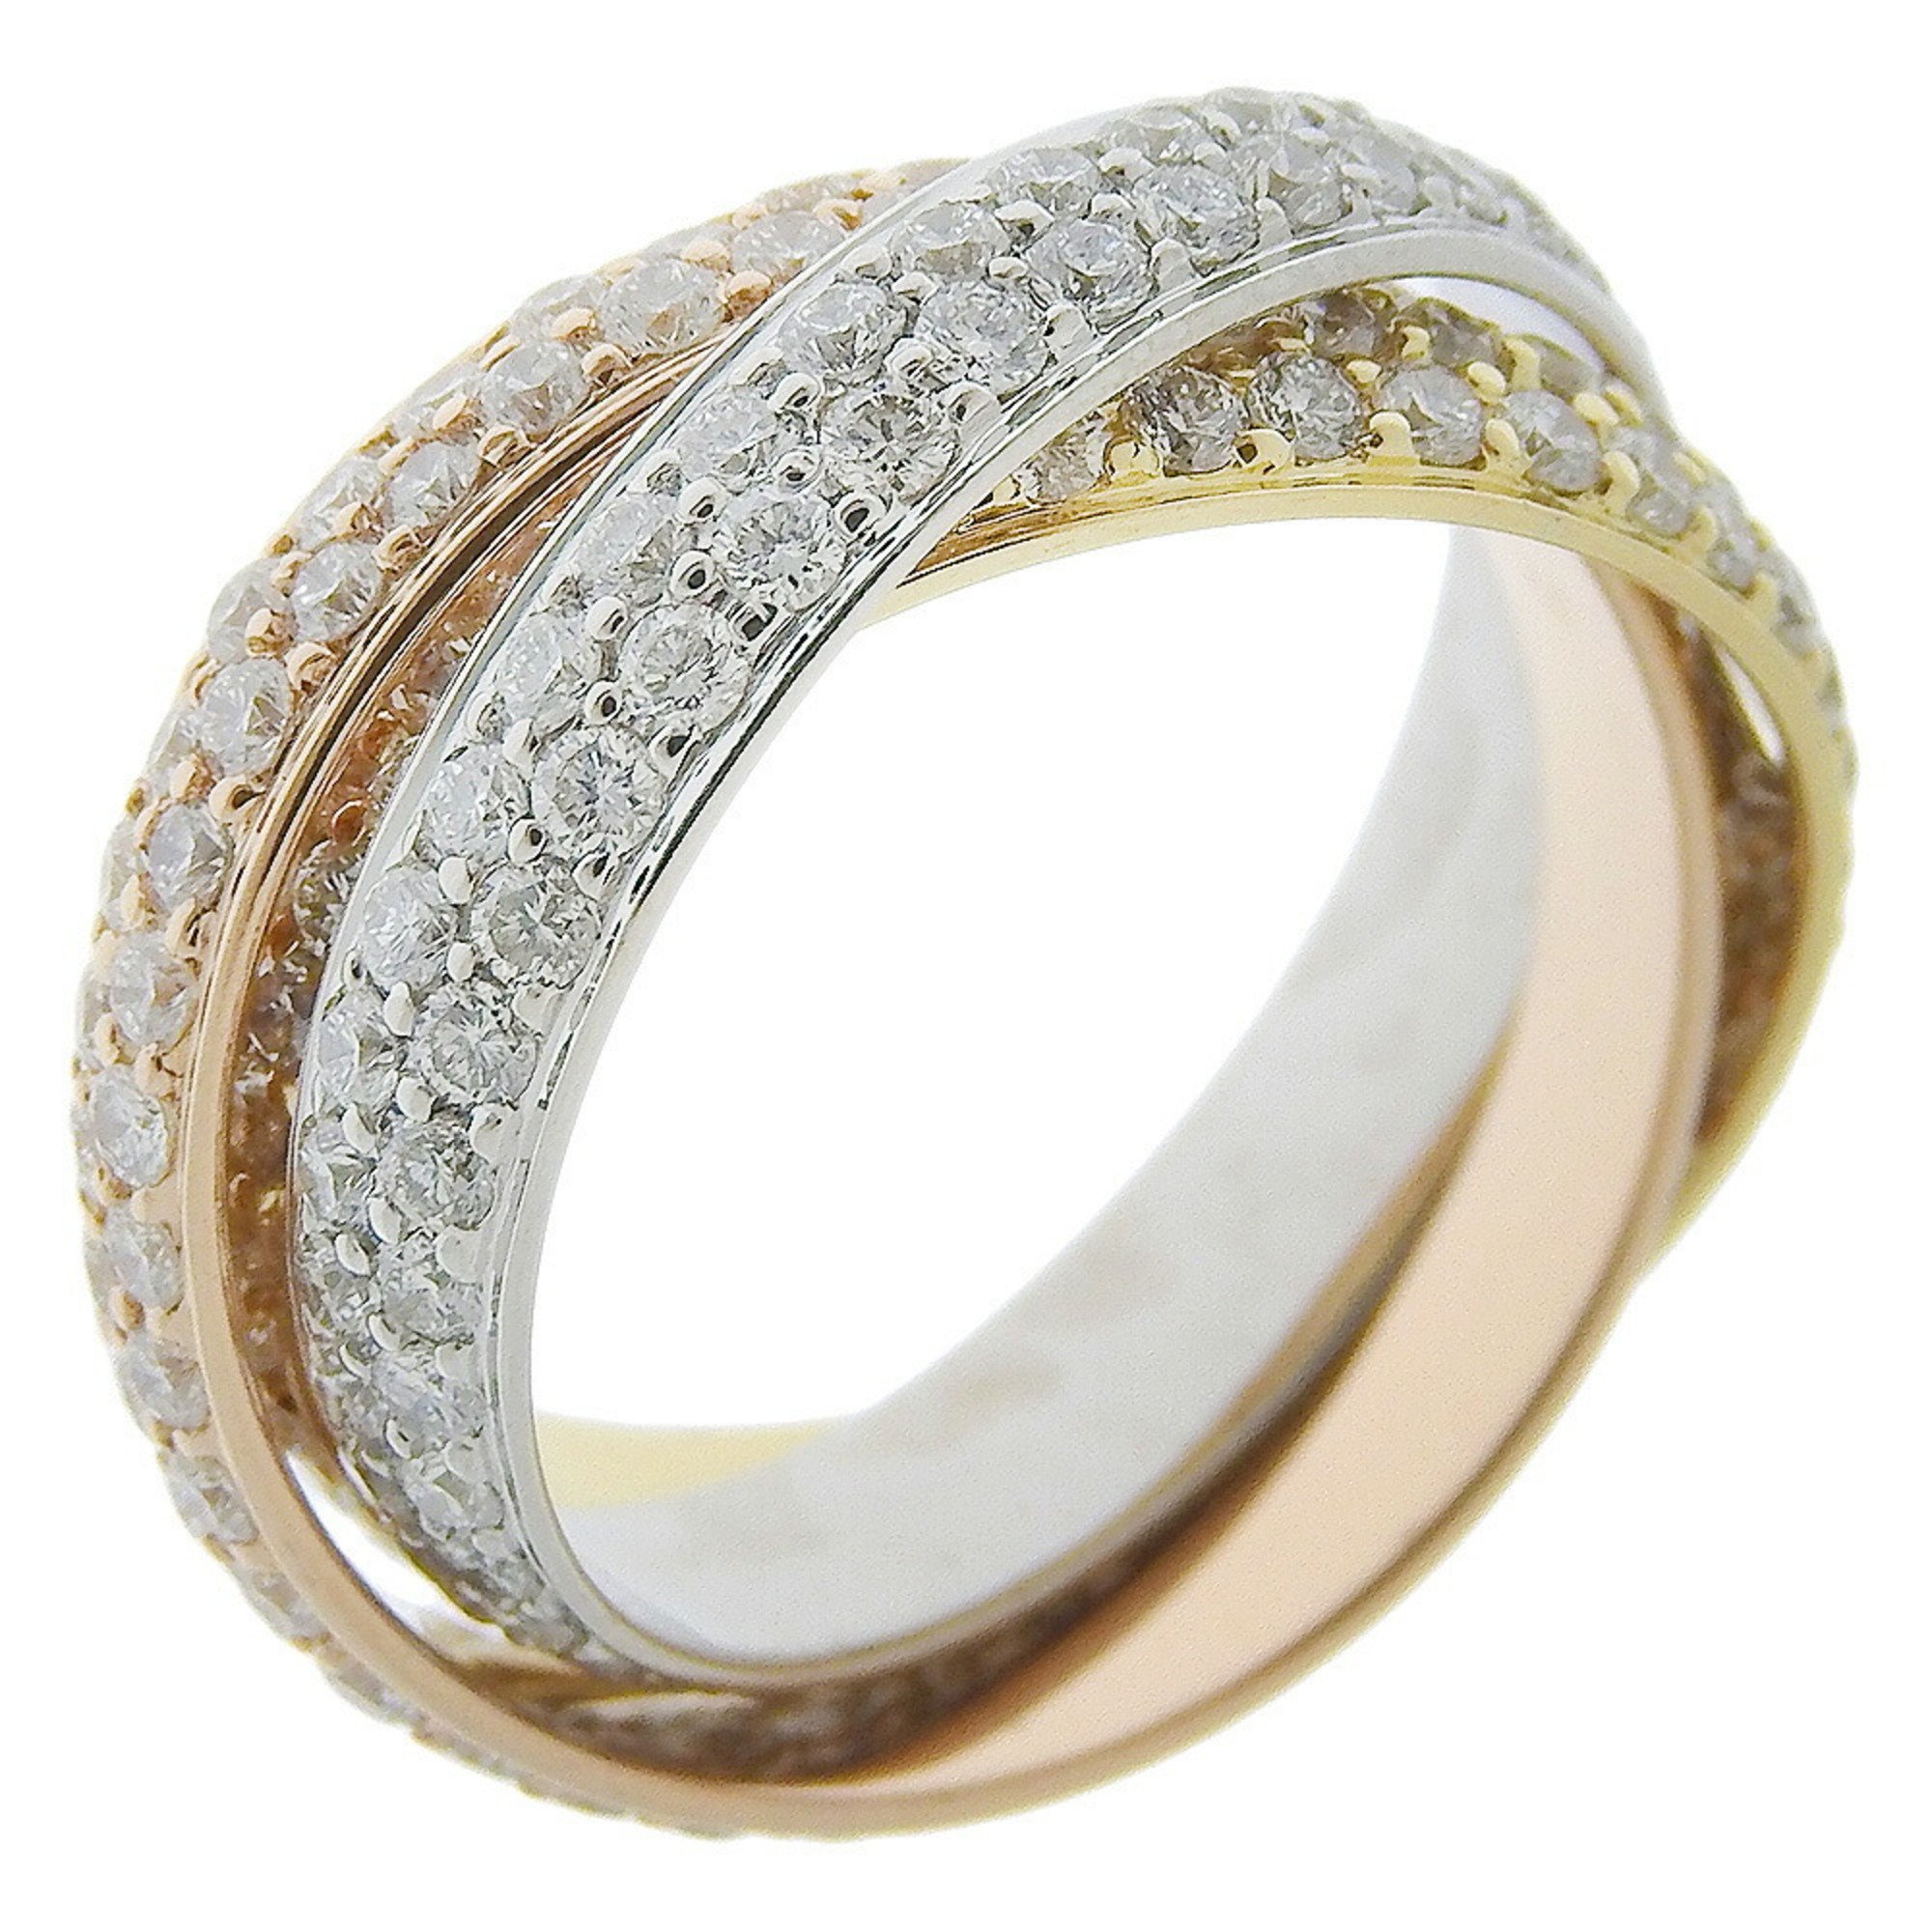 Cartier Trinity After Diamond Size 13 Ring, K18 Gold x CN273, Approx. 6.31g, Diamond, Women's